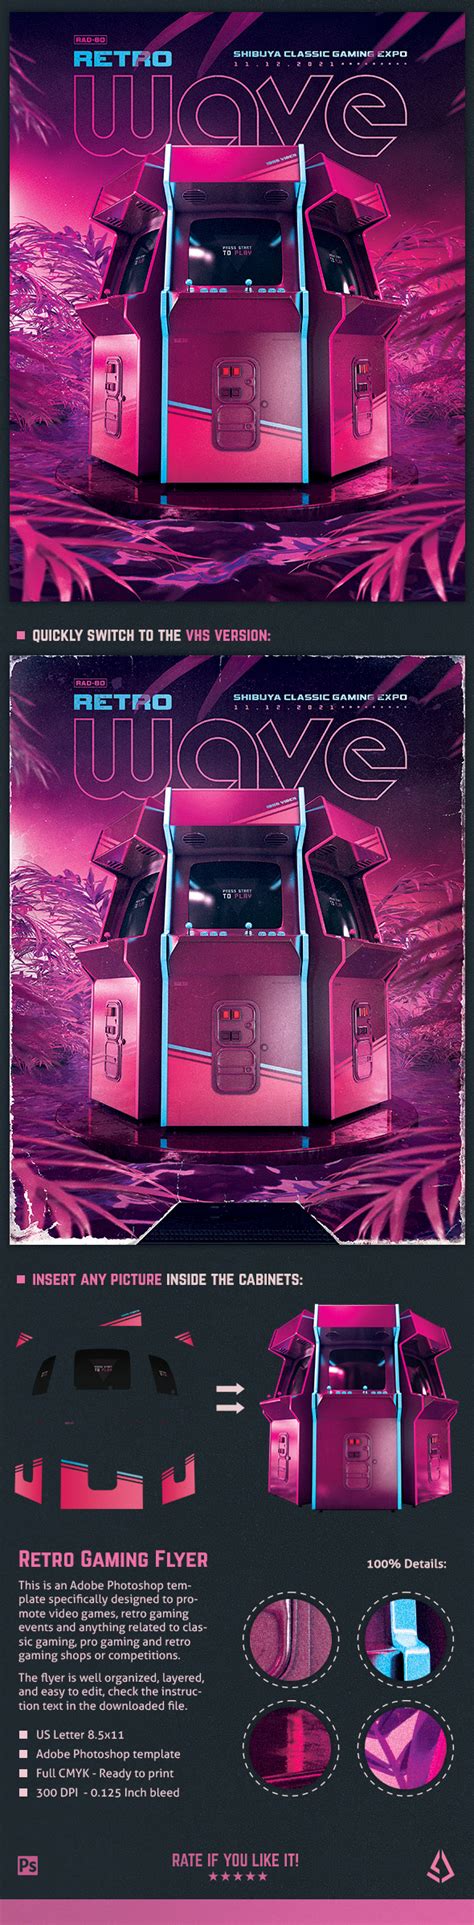 Retro Gaming Flyer 80s Synthwave Vapor Arcade Template On Behance